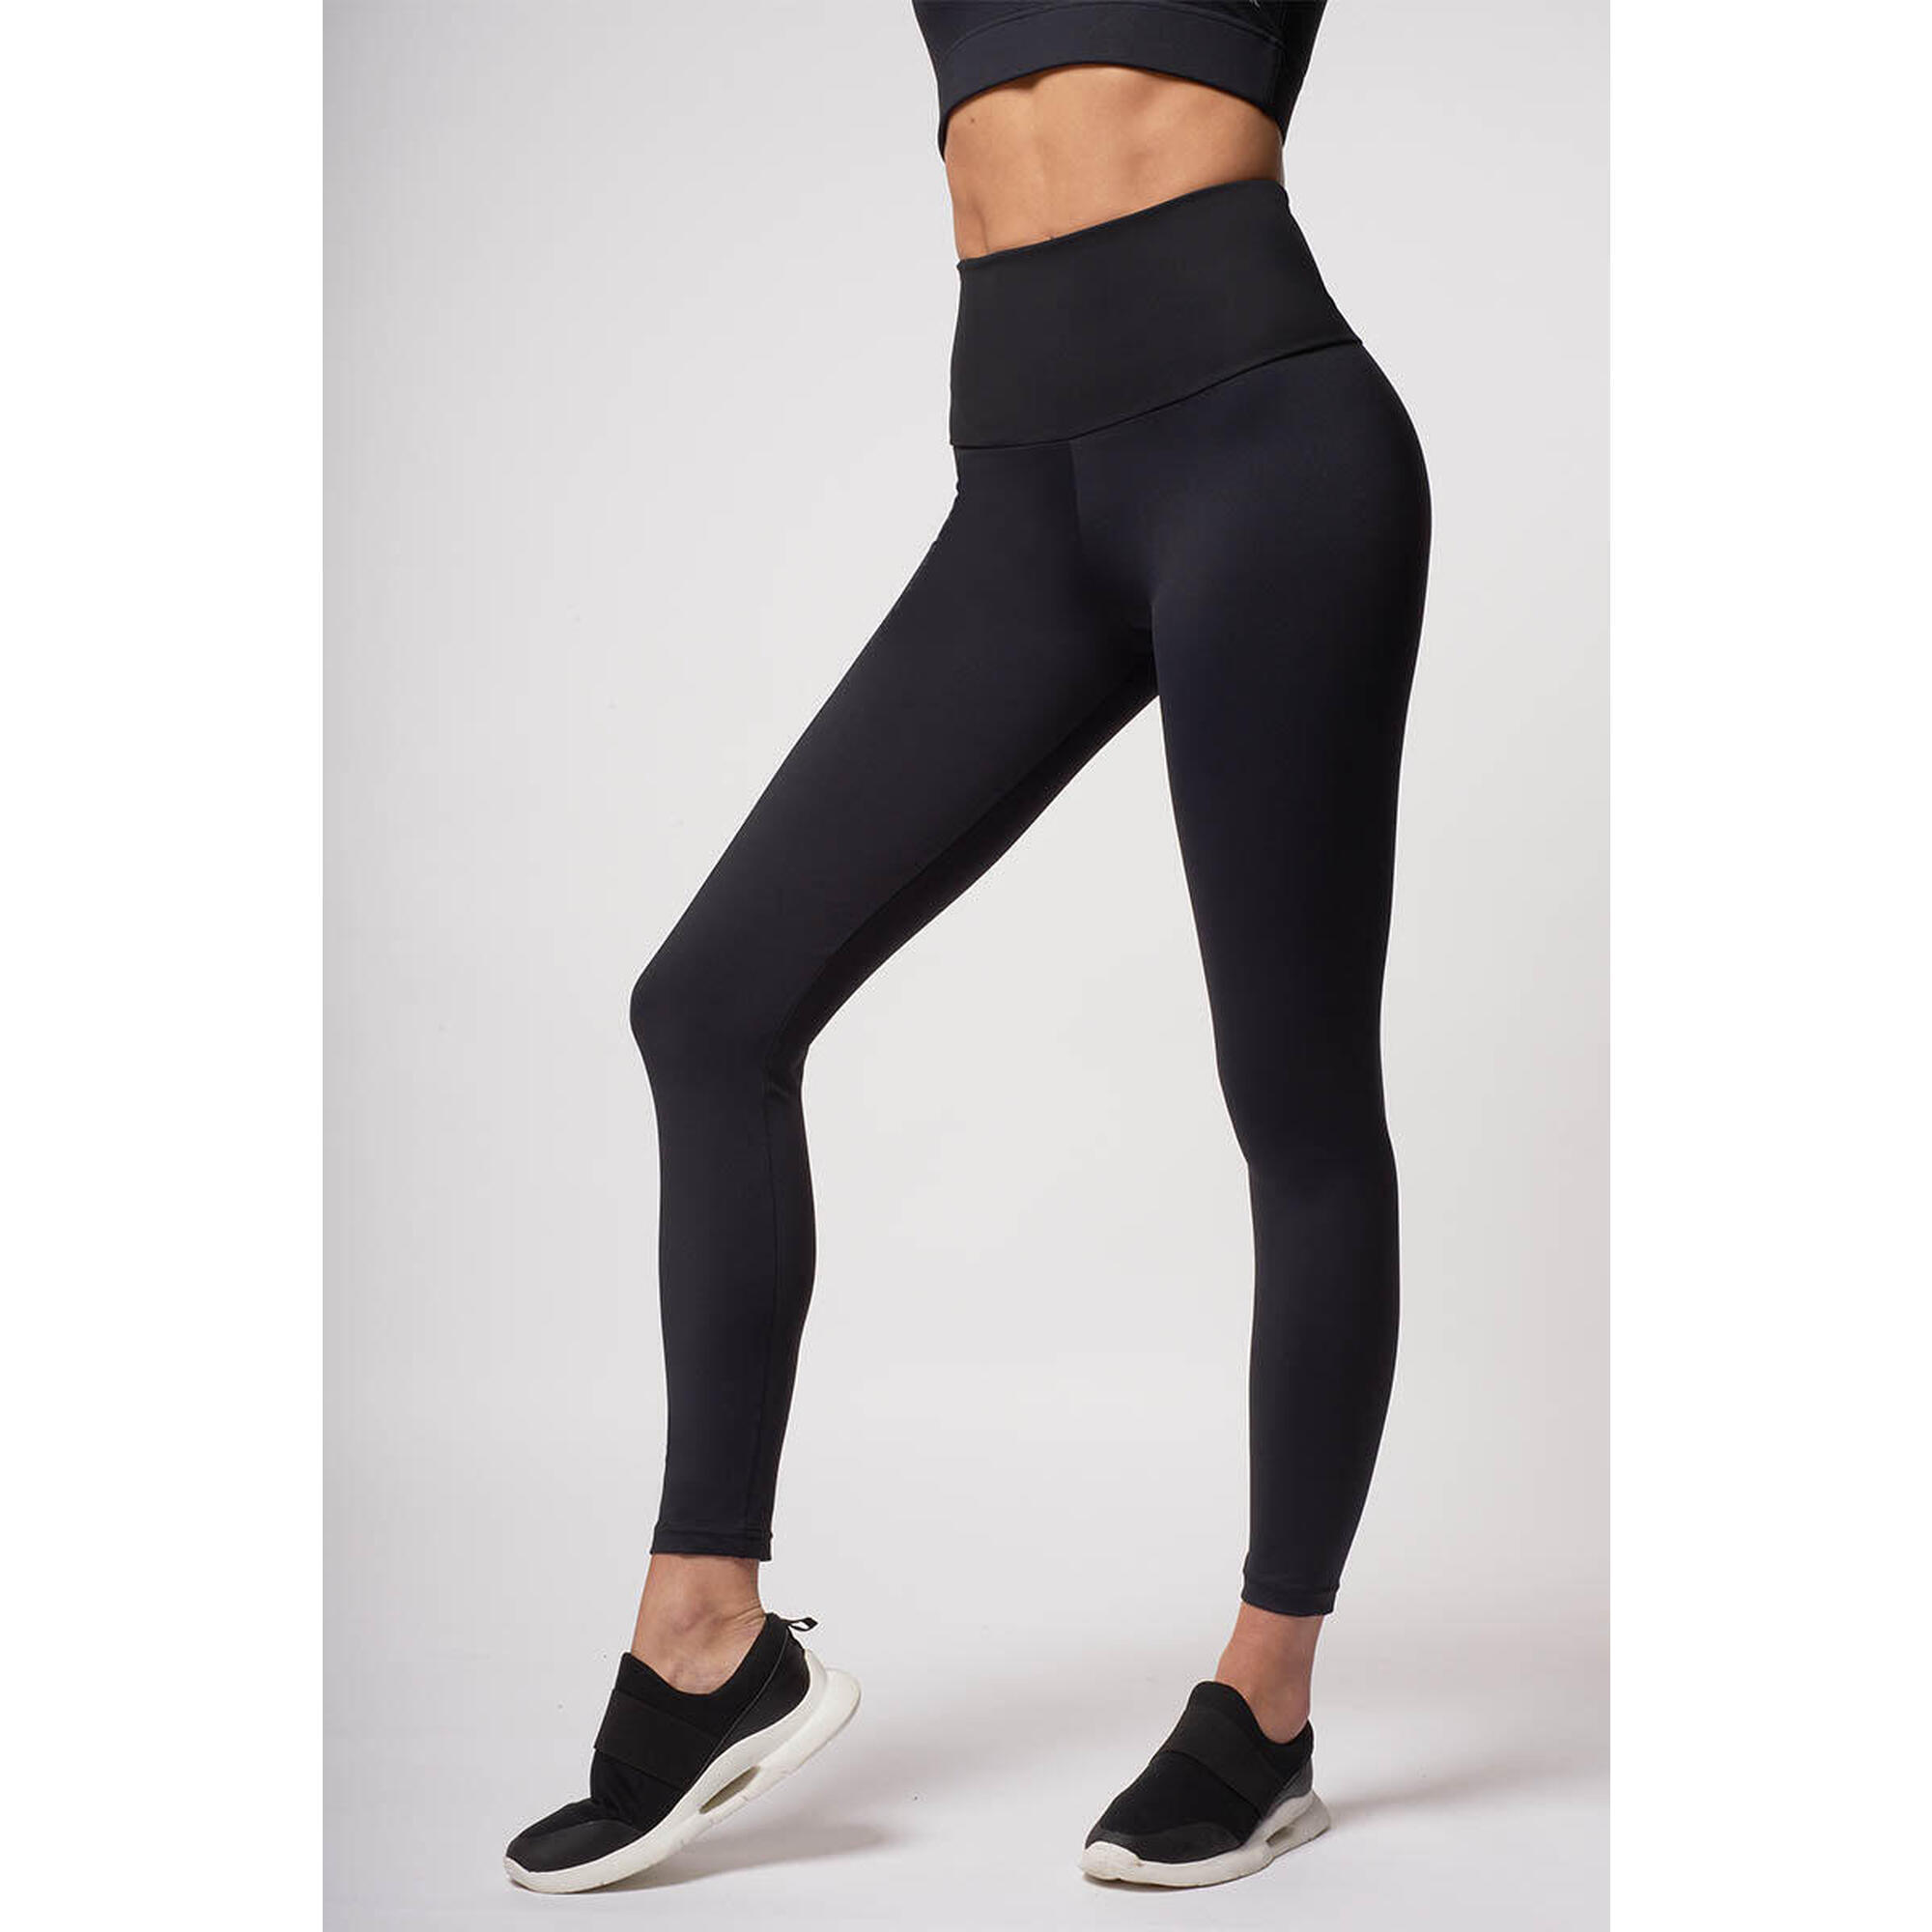 Black Leggings With Pockets for Women, Yoga Pants, 5 High Waist Leggings,  Buttery Soft, One Size, Plus Size, 2XL Leggings, Workout Leggings -  UK